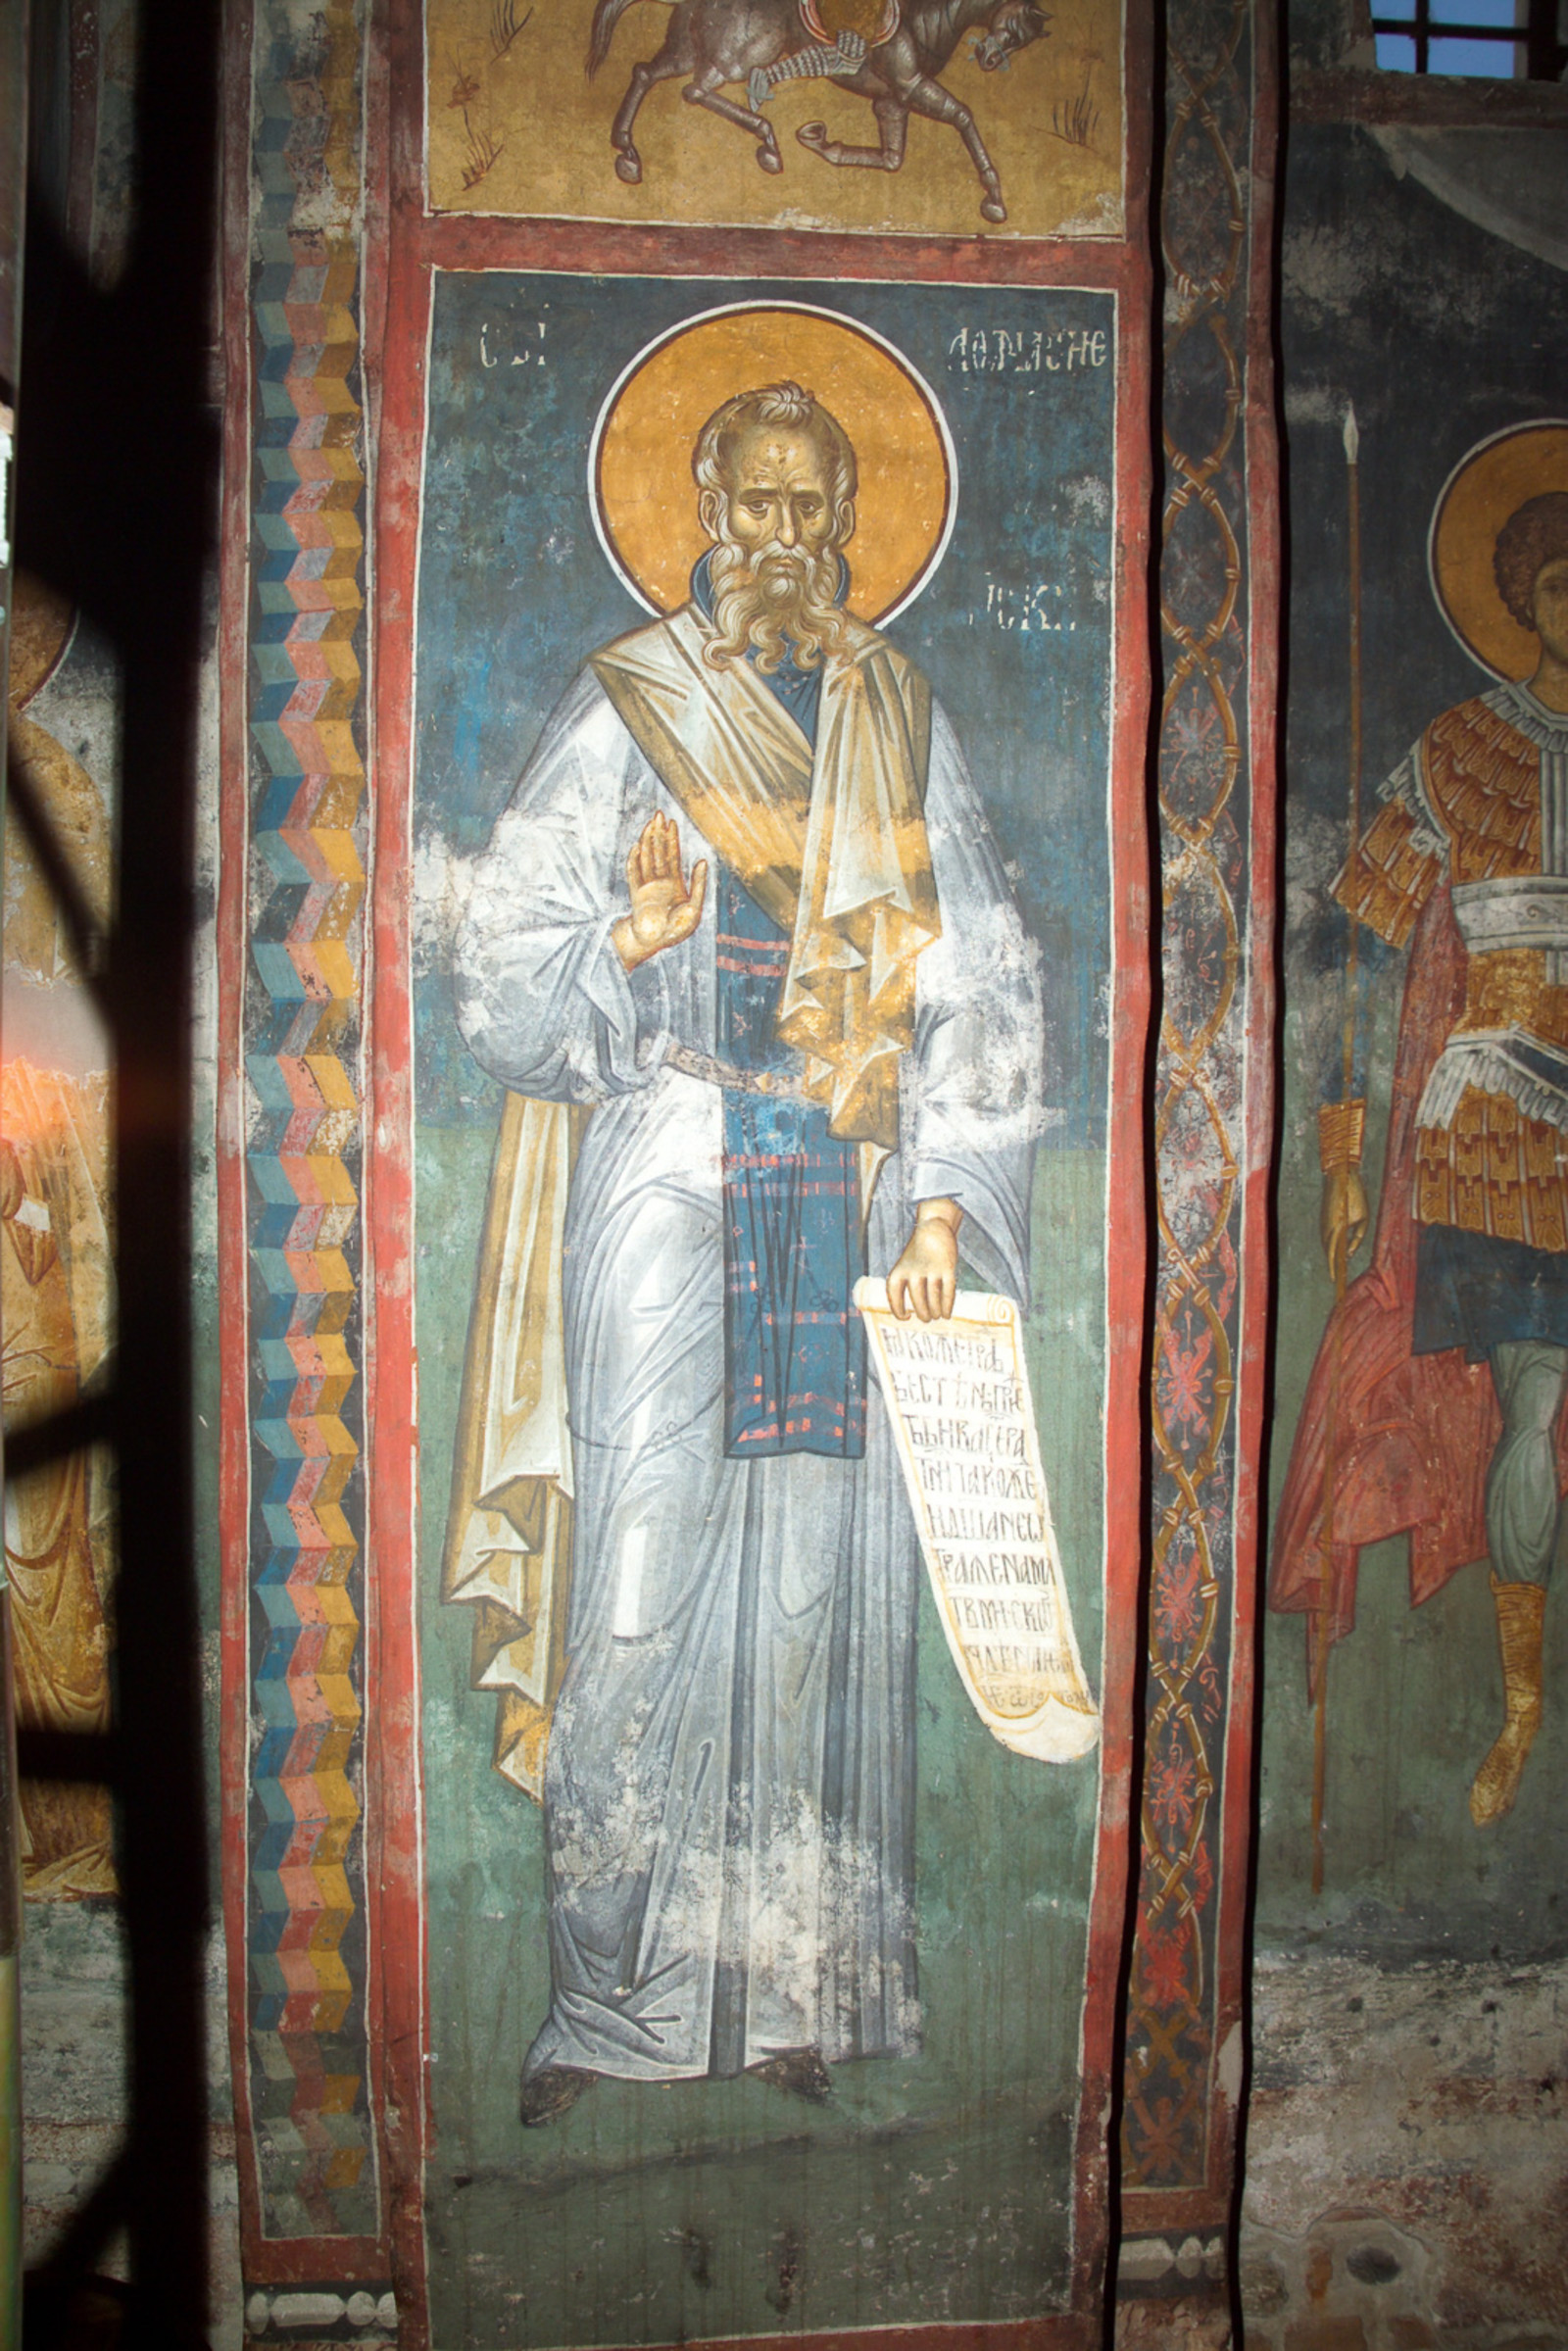 83 St. Athanasius the Athonite